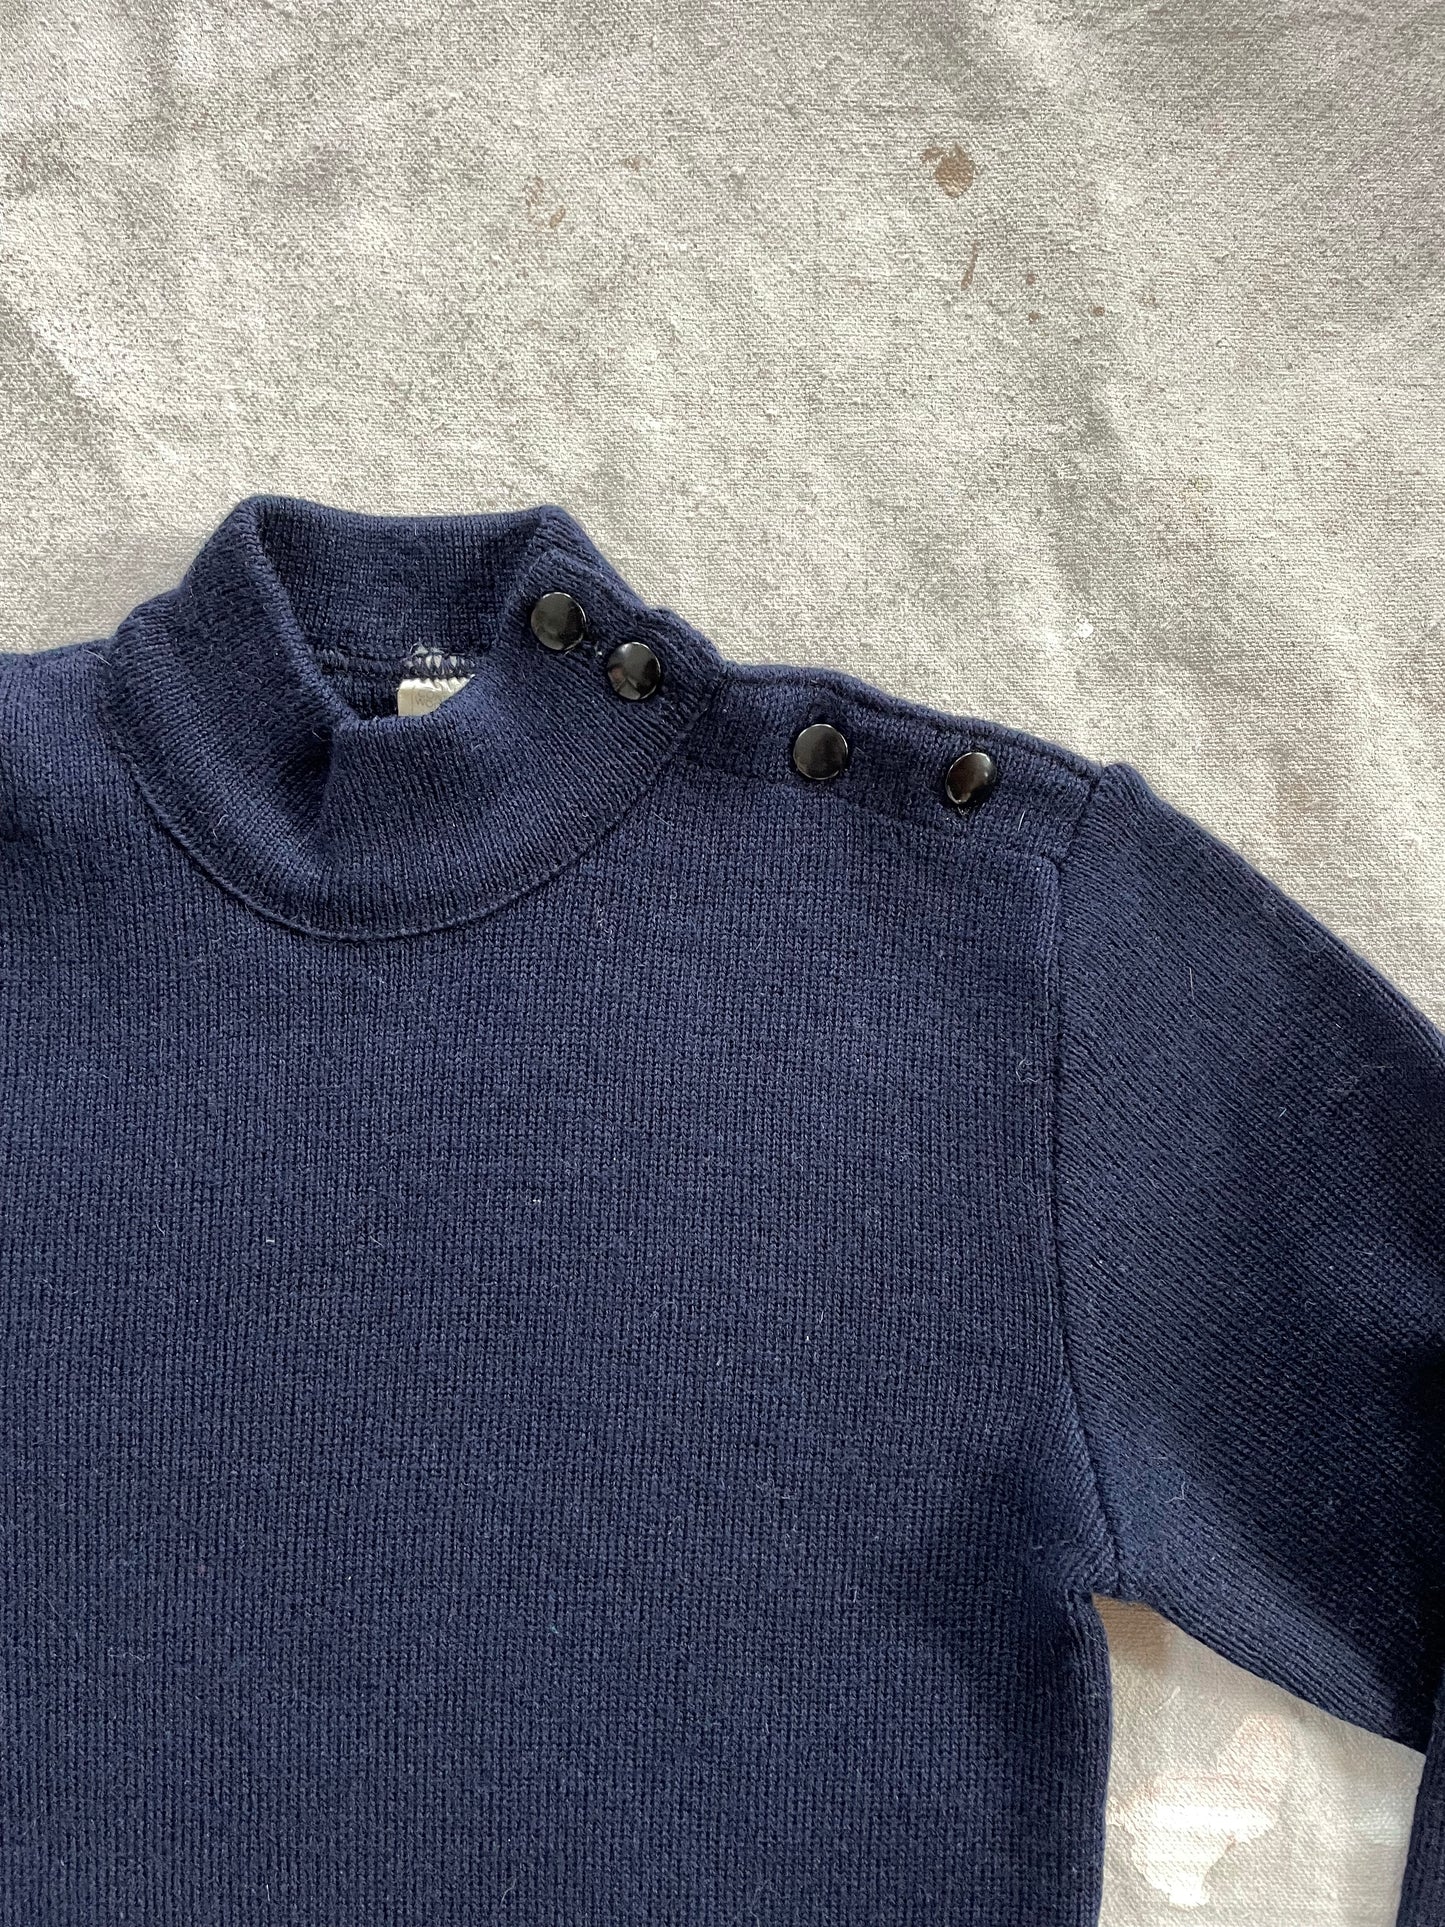 Navy Blue Mock Neck Sweater